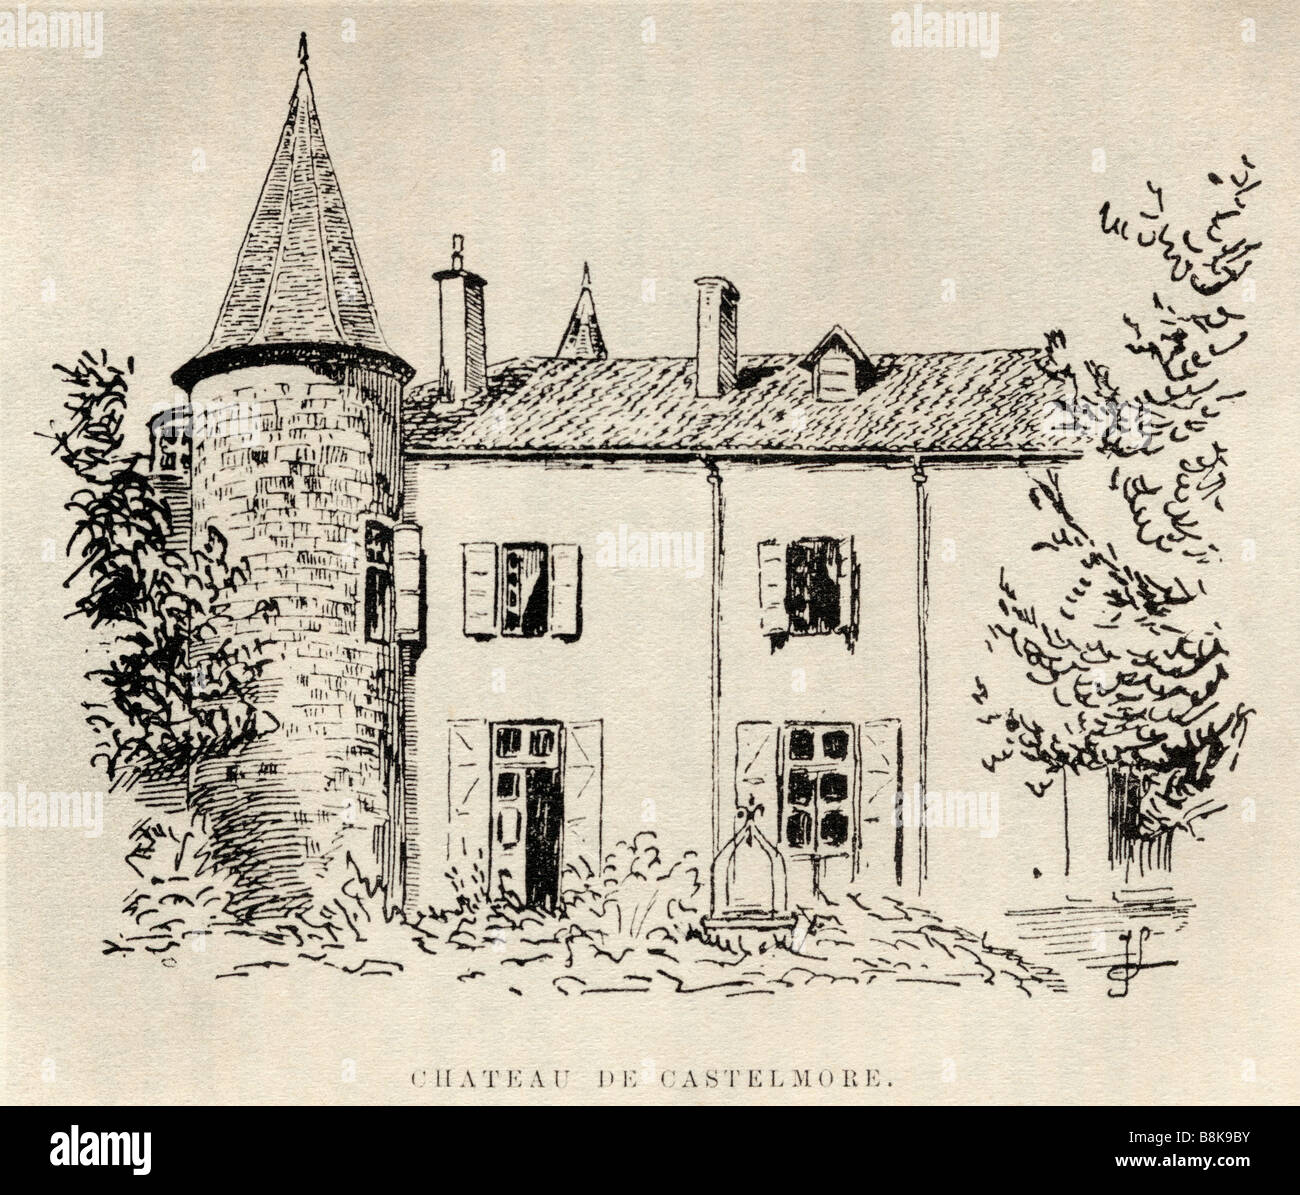 Chateau de Castelmore. Haus, in dem Charles de Batz Castelmore Comte d'Artagnan geboren wurde. Stockfoto